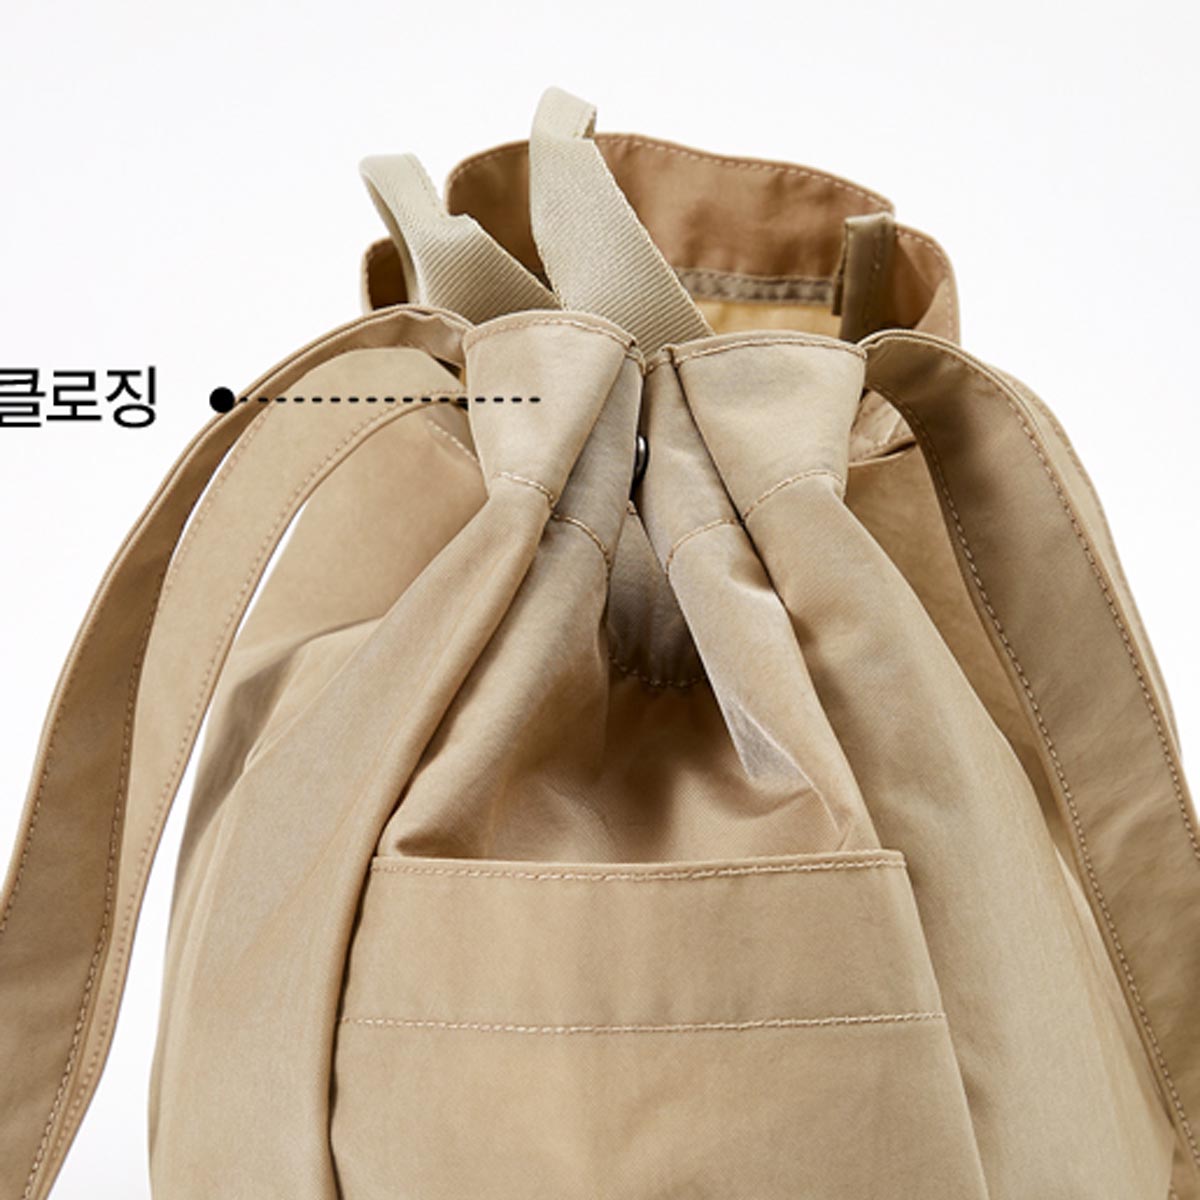 Nylon Diaper Bag – Keeks Designer Handbags